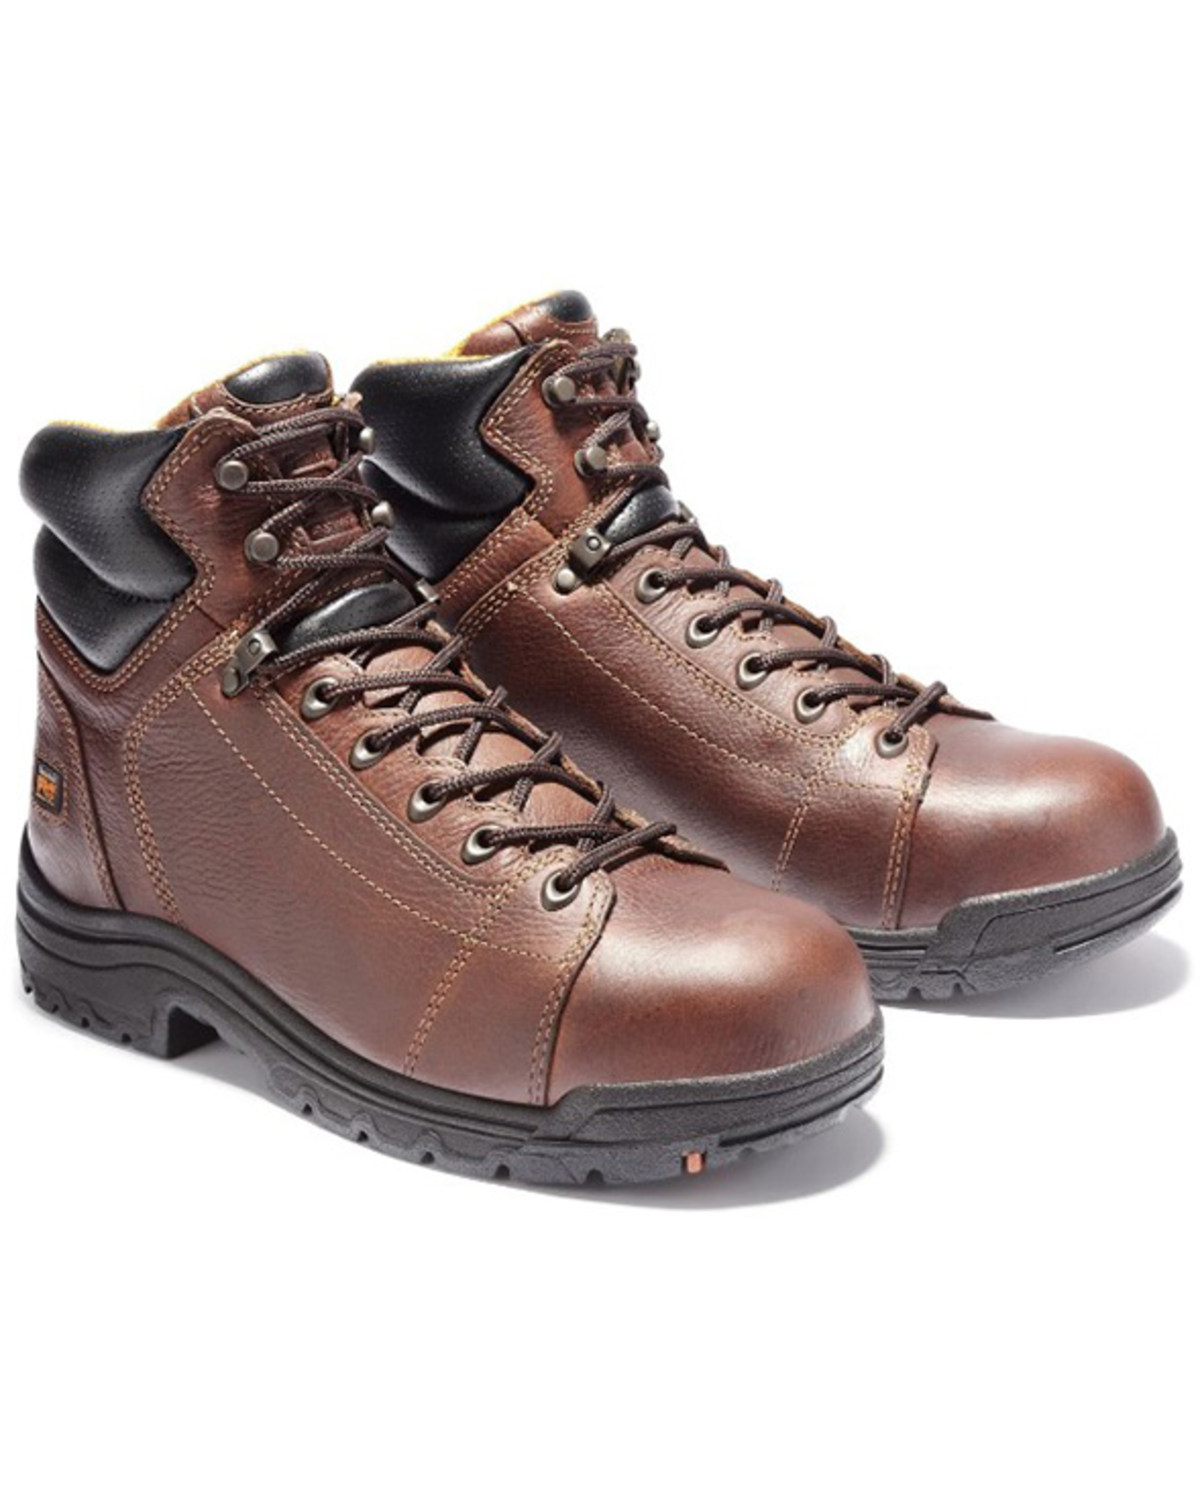 Timberland Men's 6" TiTAN Work Boots - Alloy Toe